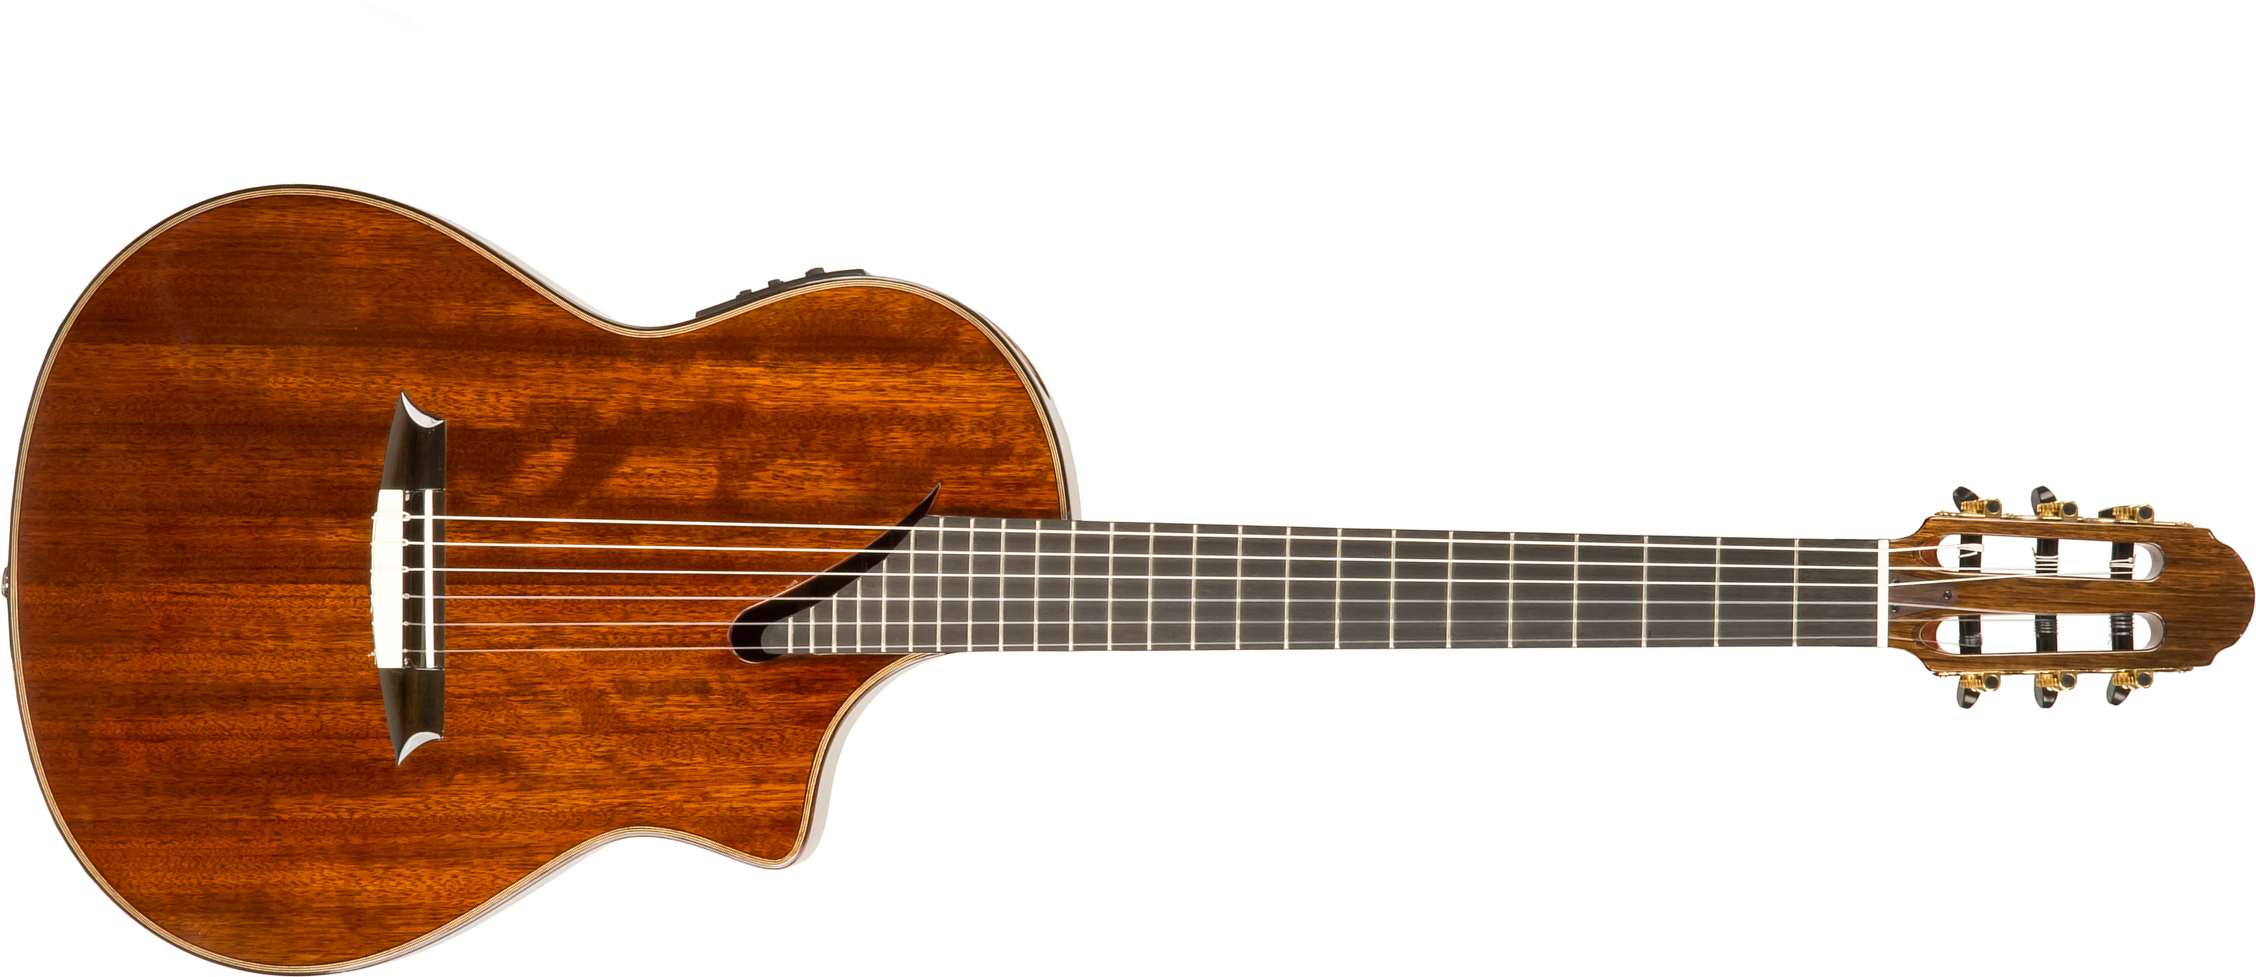 Martinez Mscc-14ov Performer Tout Ovangkol Rw +etui - Natural - Guitare Classique Format 4/4 - Main picture